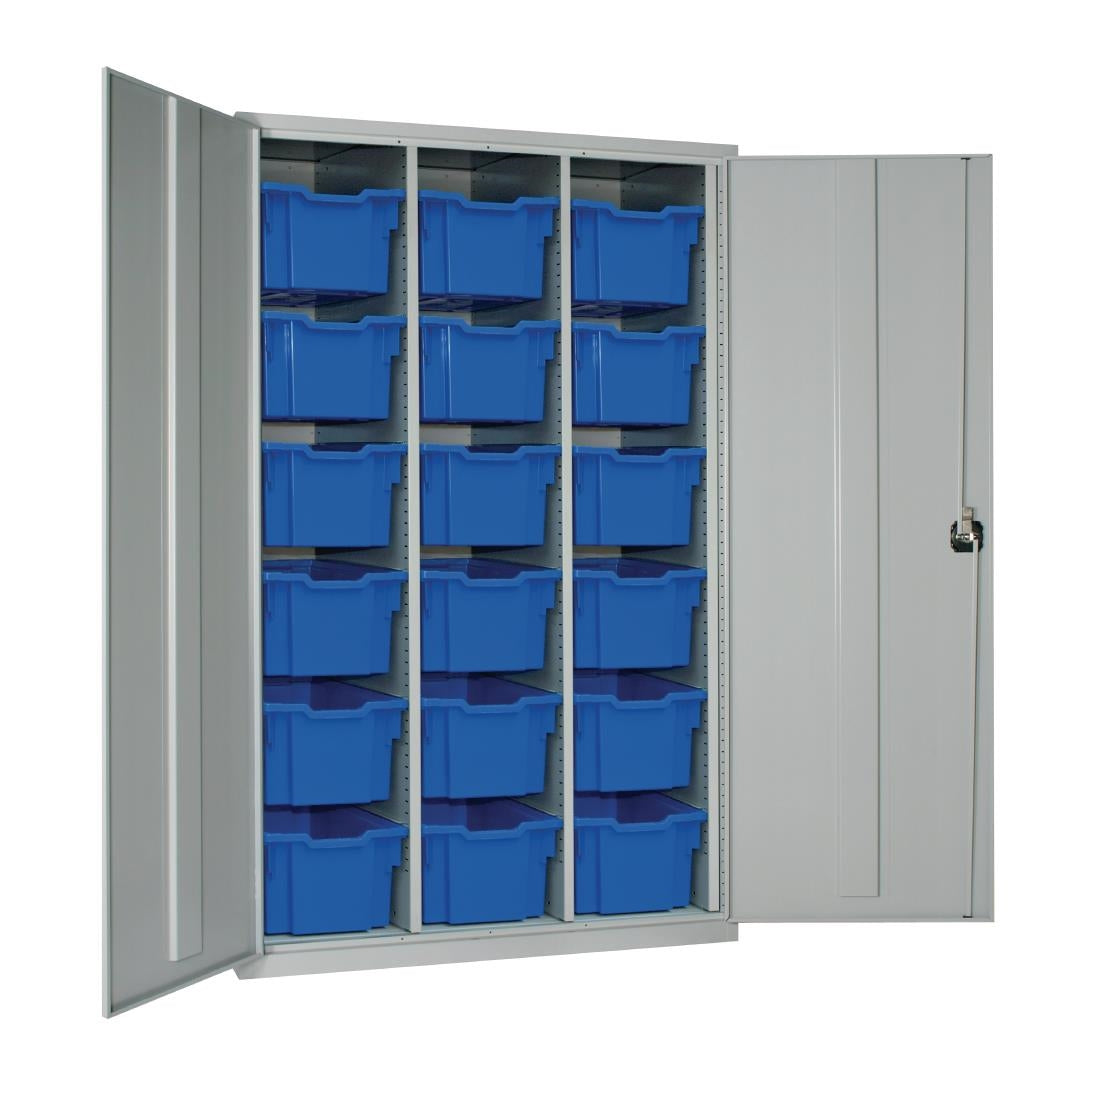 18 Tray High-Capacity Storage Cupboard - Grey with Blue Trays